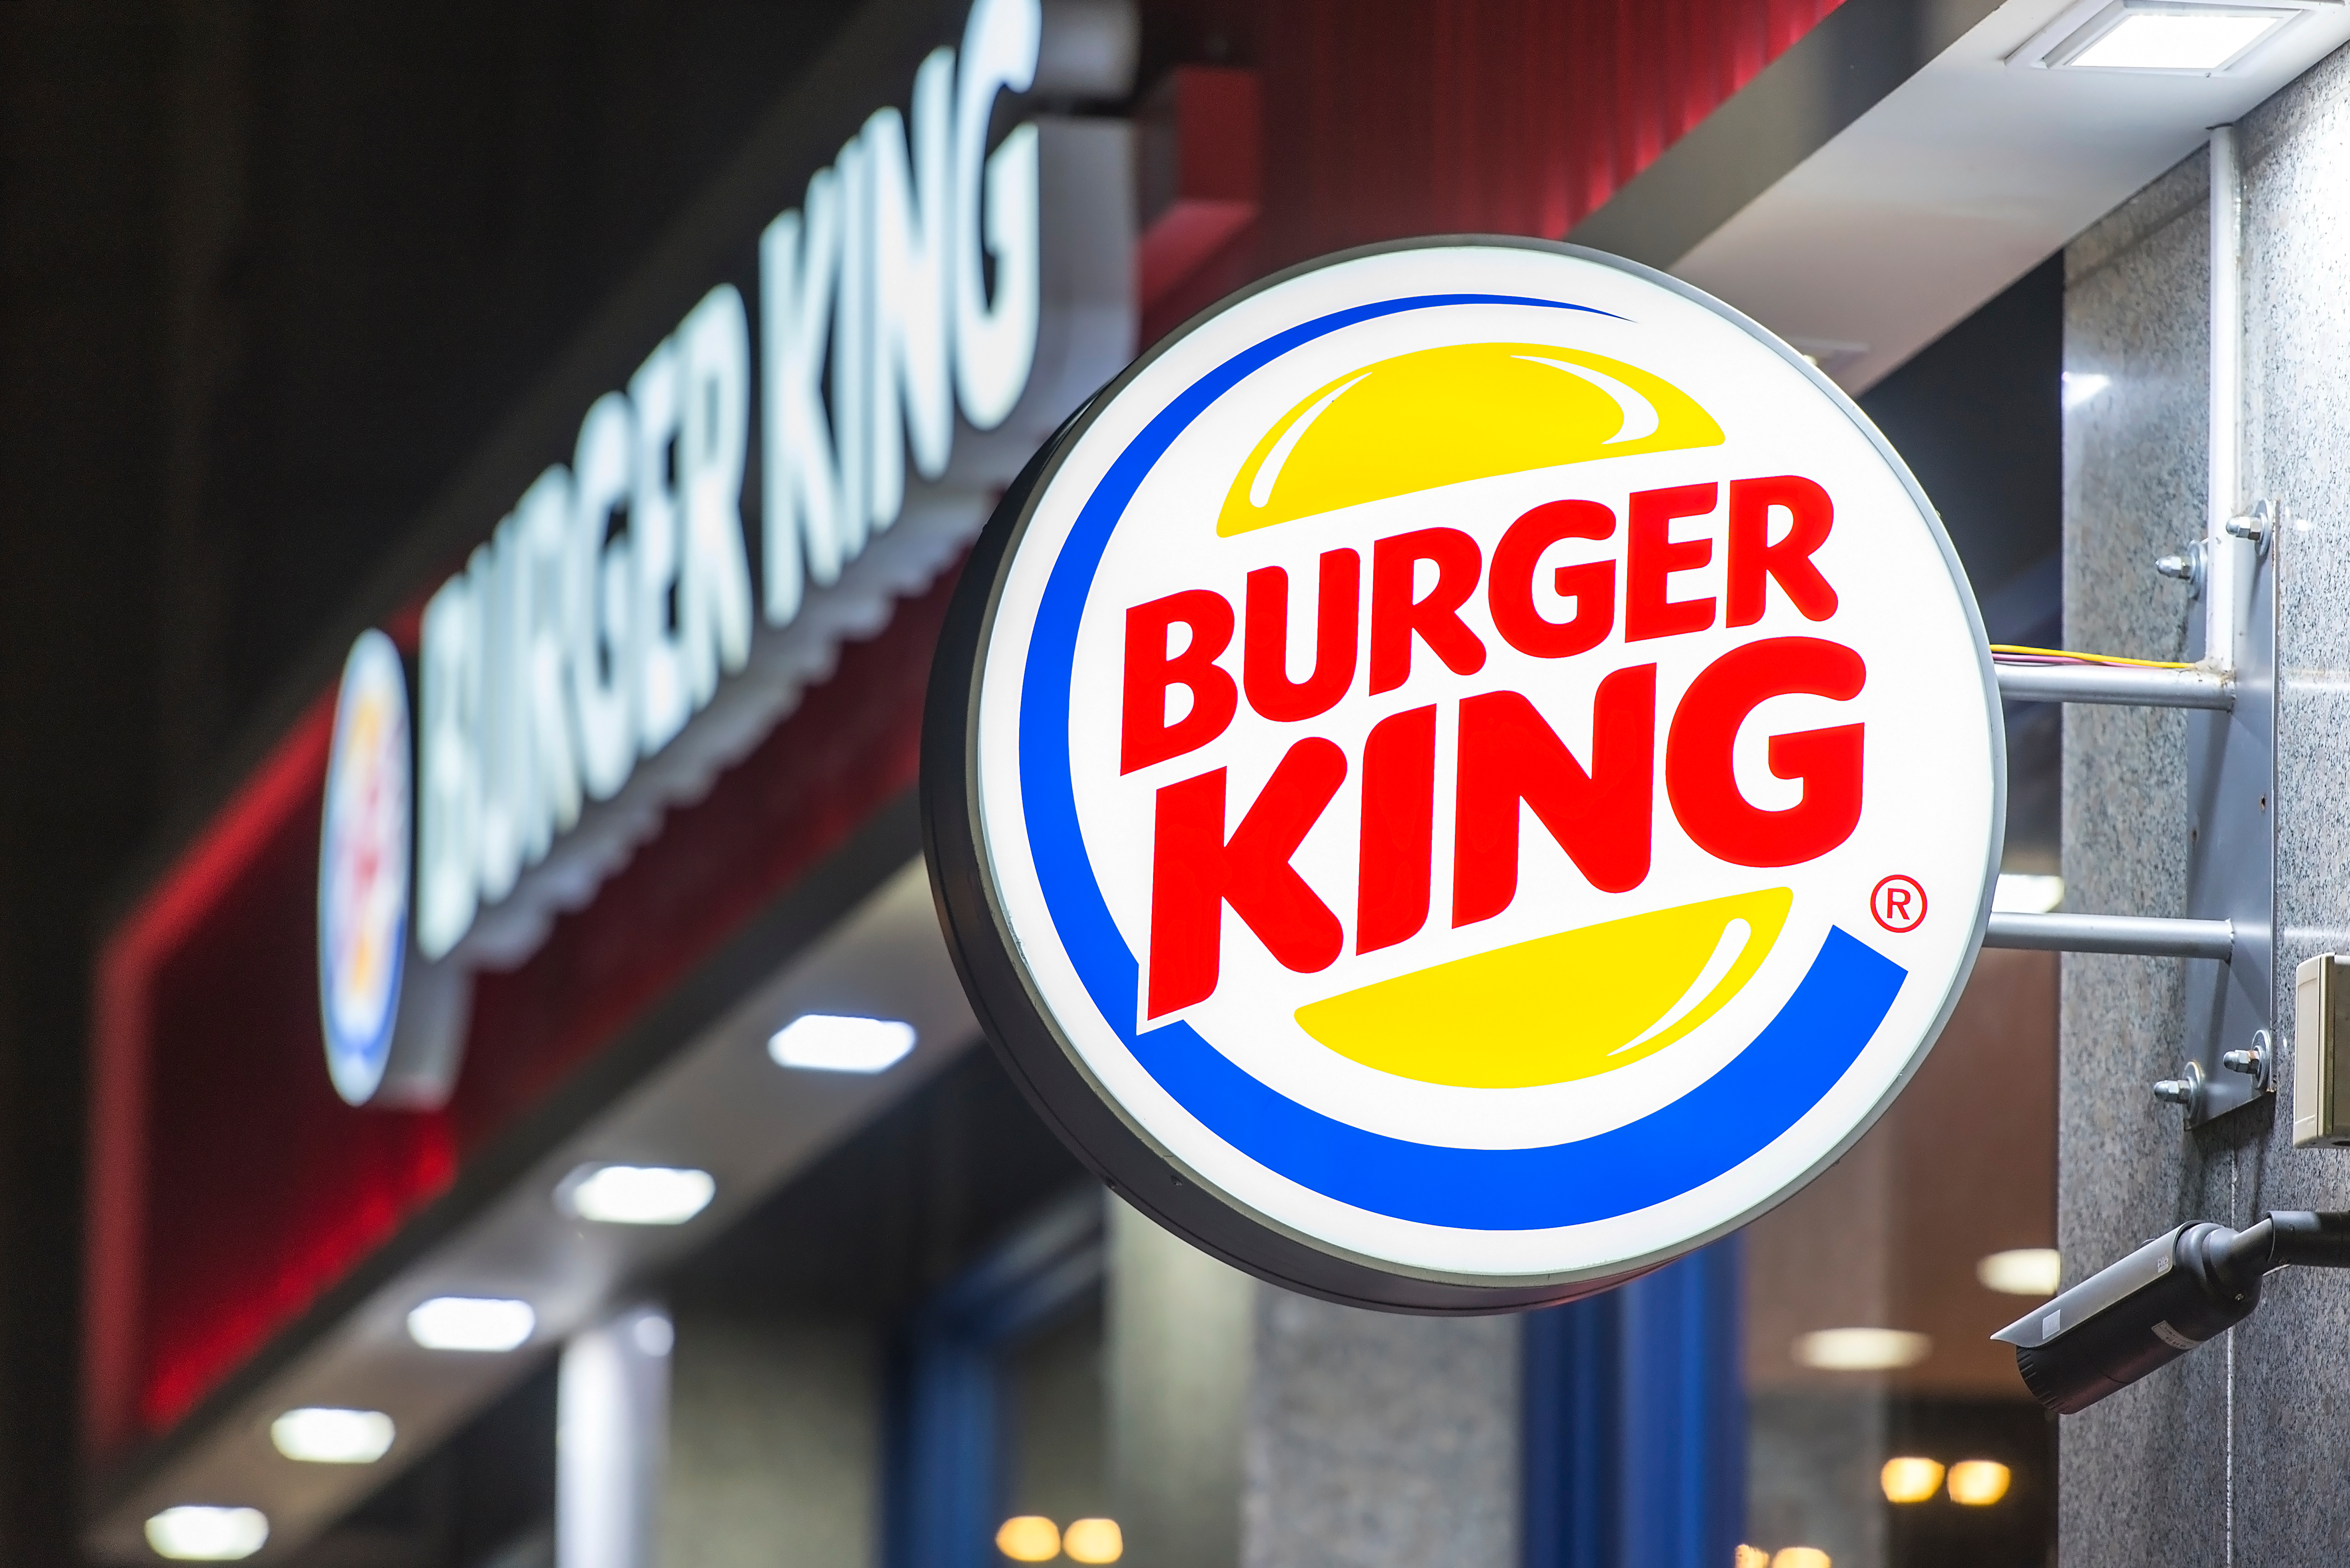 Burger king restaurant